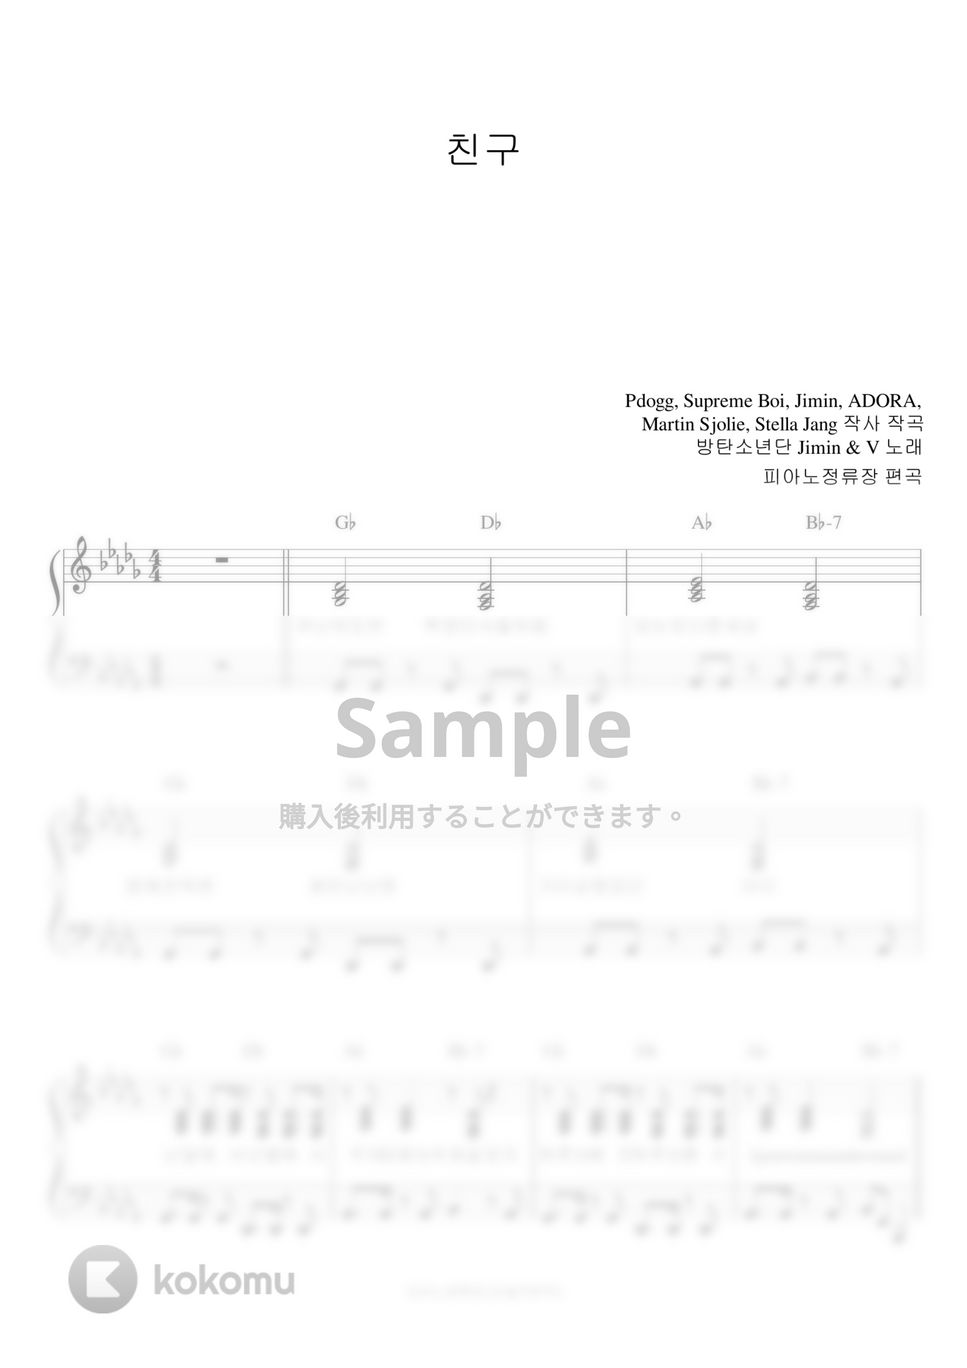 防弾少年団(BTS) - Friends (伴奏楽譜) by pianojeongryujang